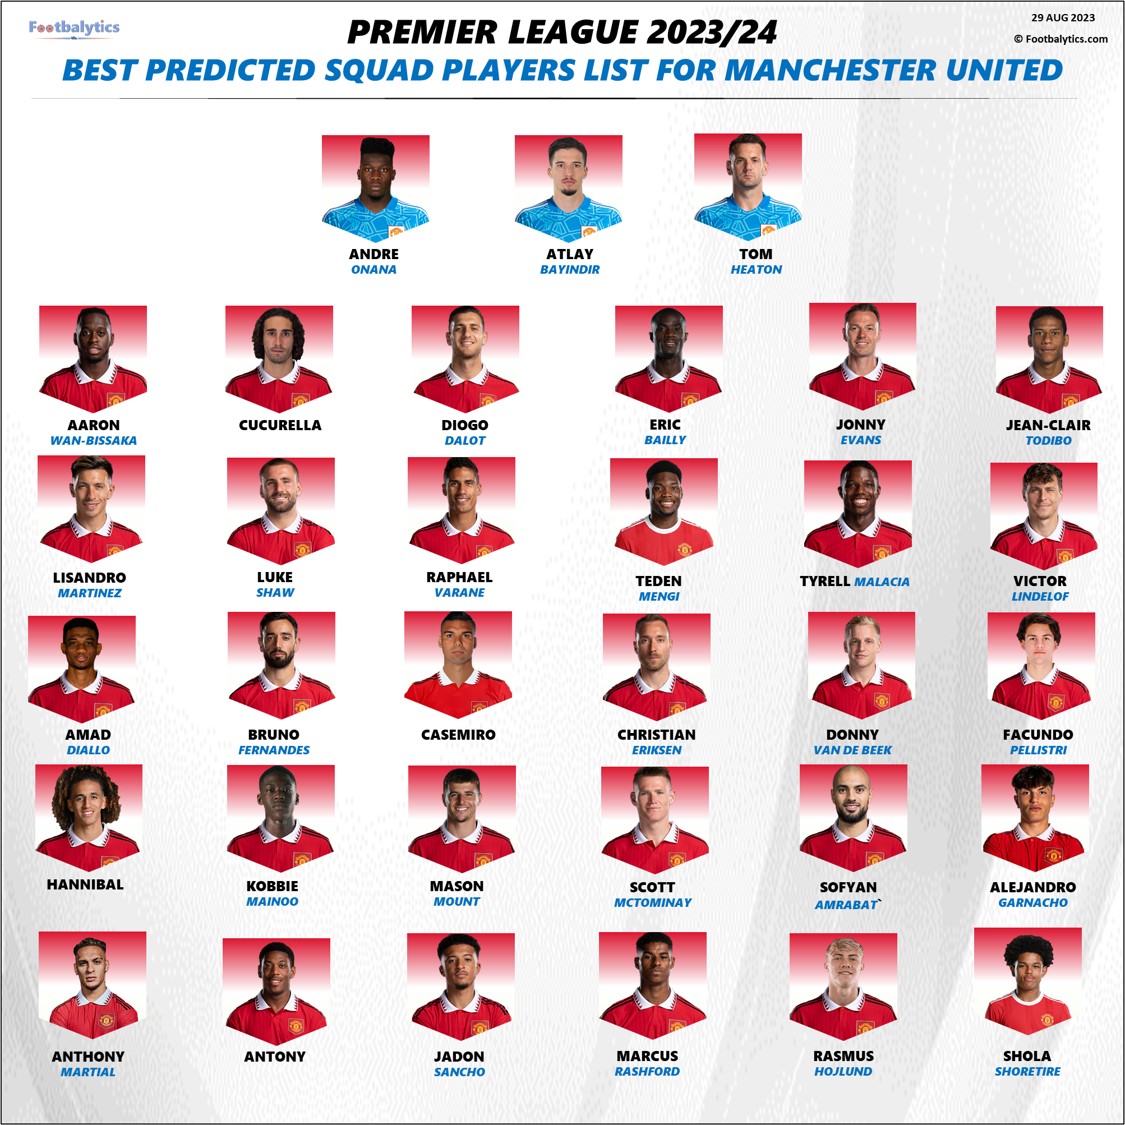 Premier League 2023: Confirmed Squad List for Manchester United